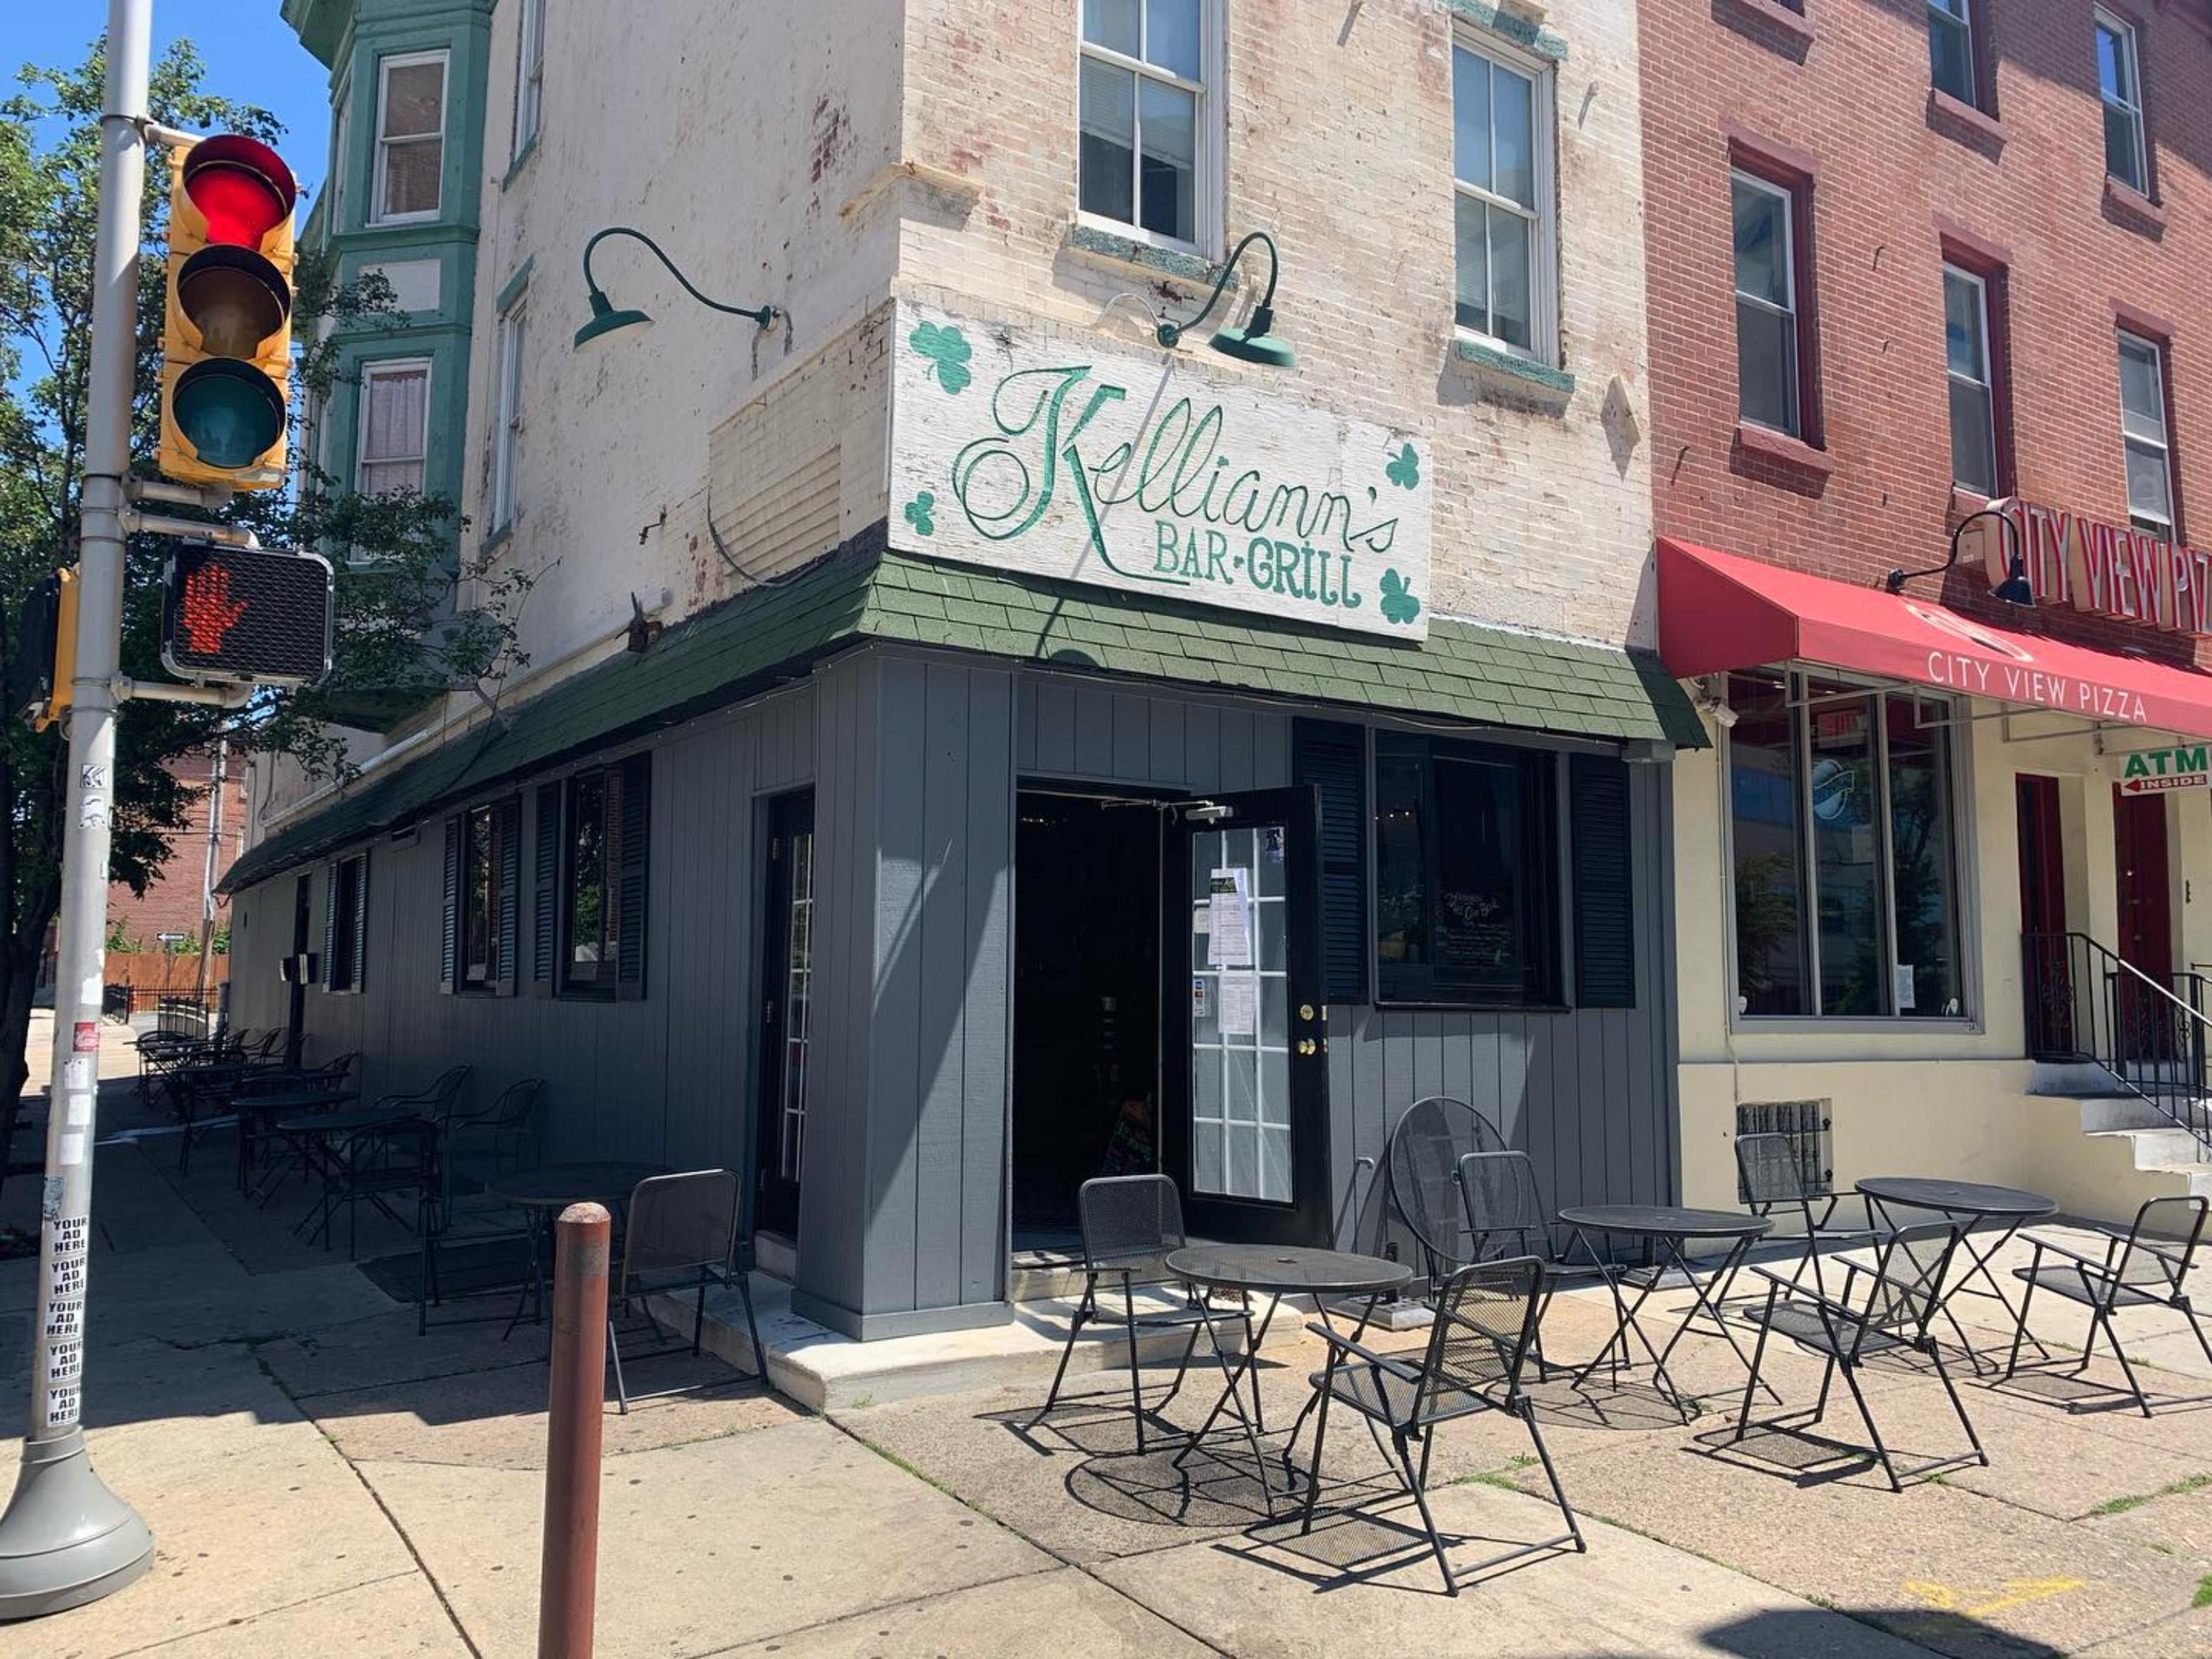 Kelliann’s Bar & Grill